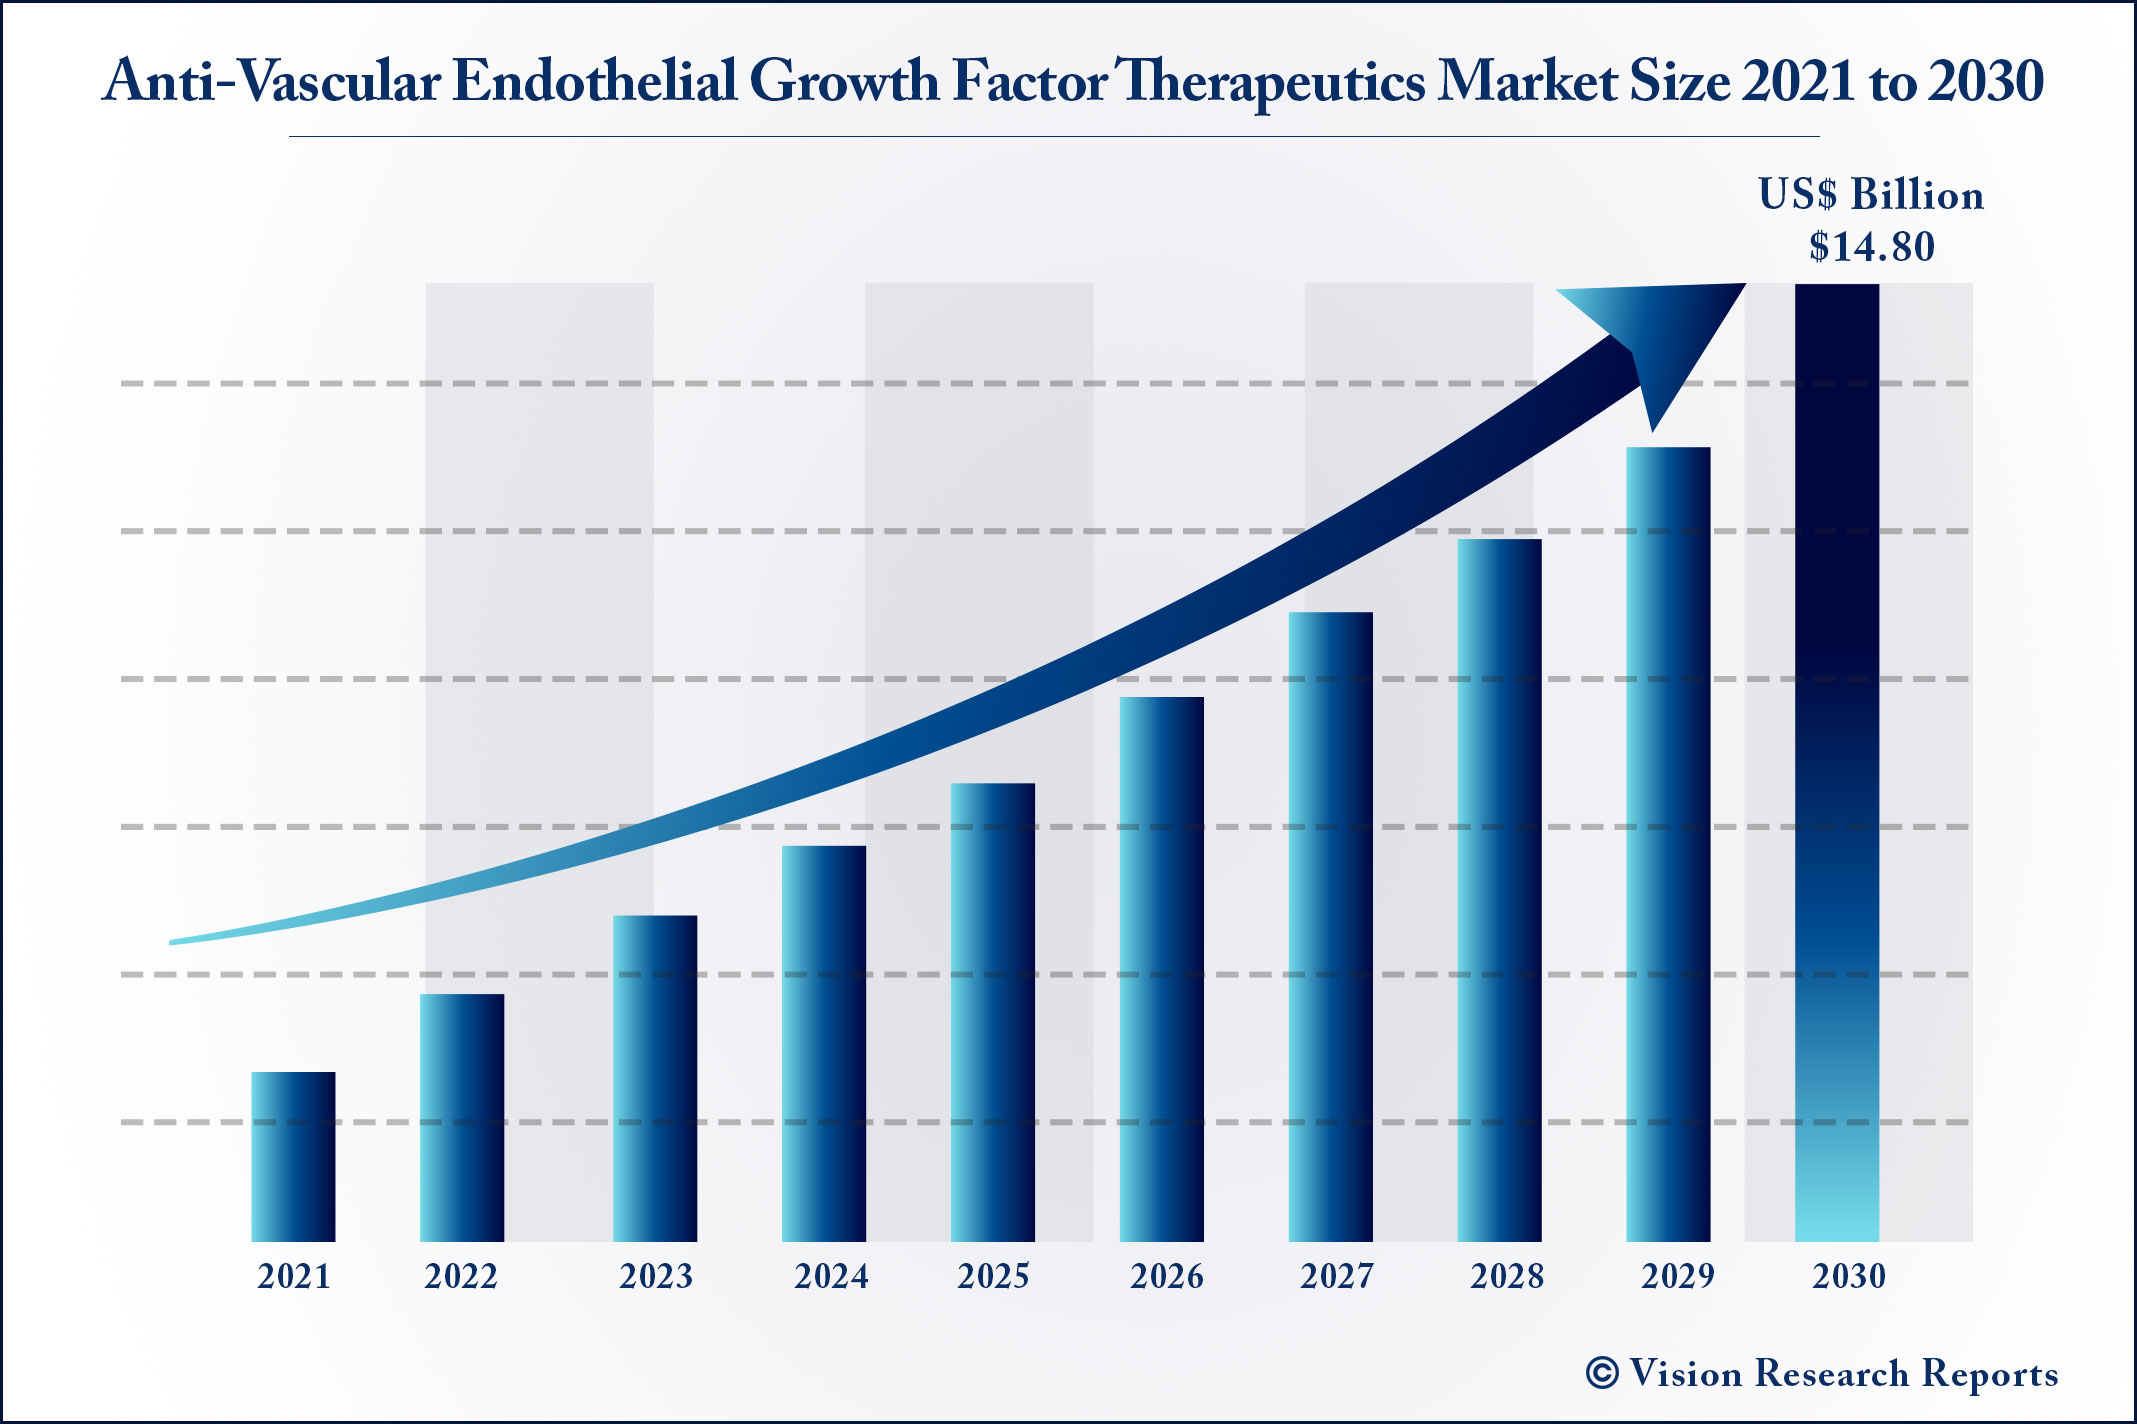 Anti-Vascular Endothelial Growth Factor Therapeutics Market Size 2021 to 2030